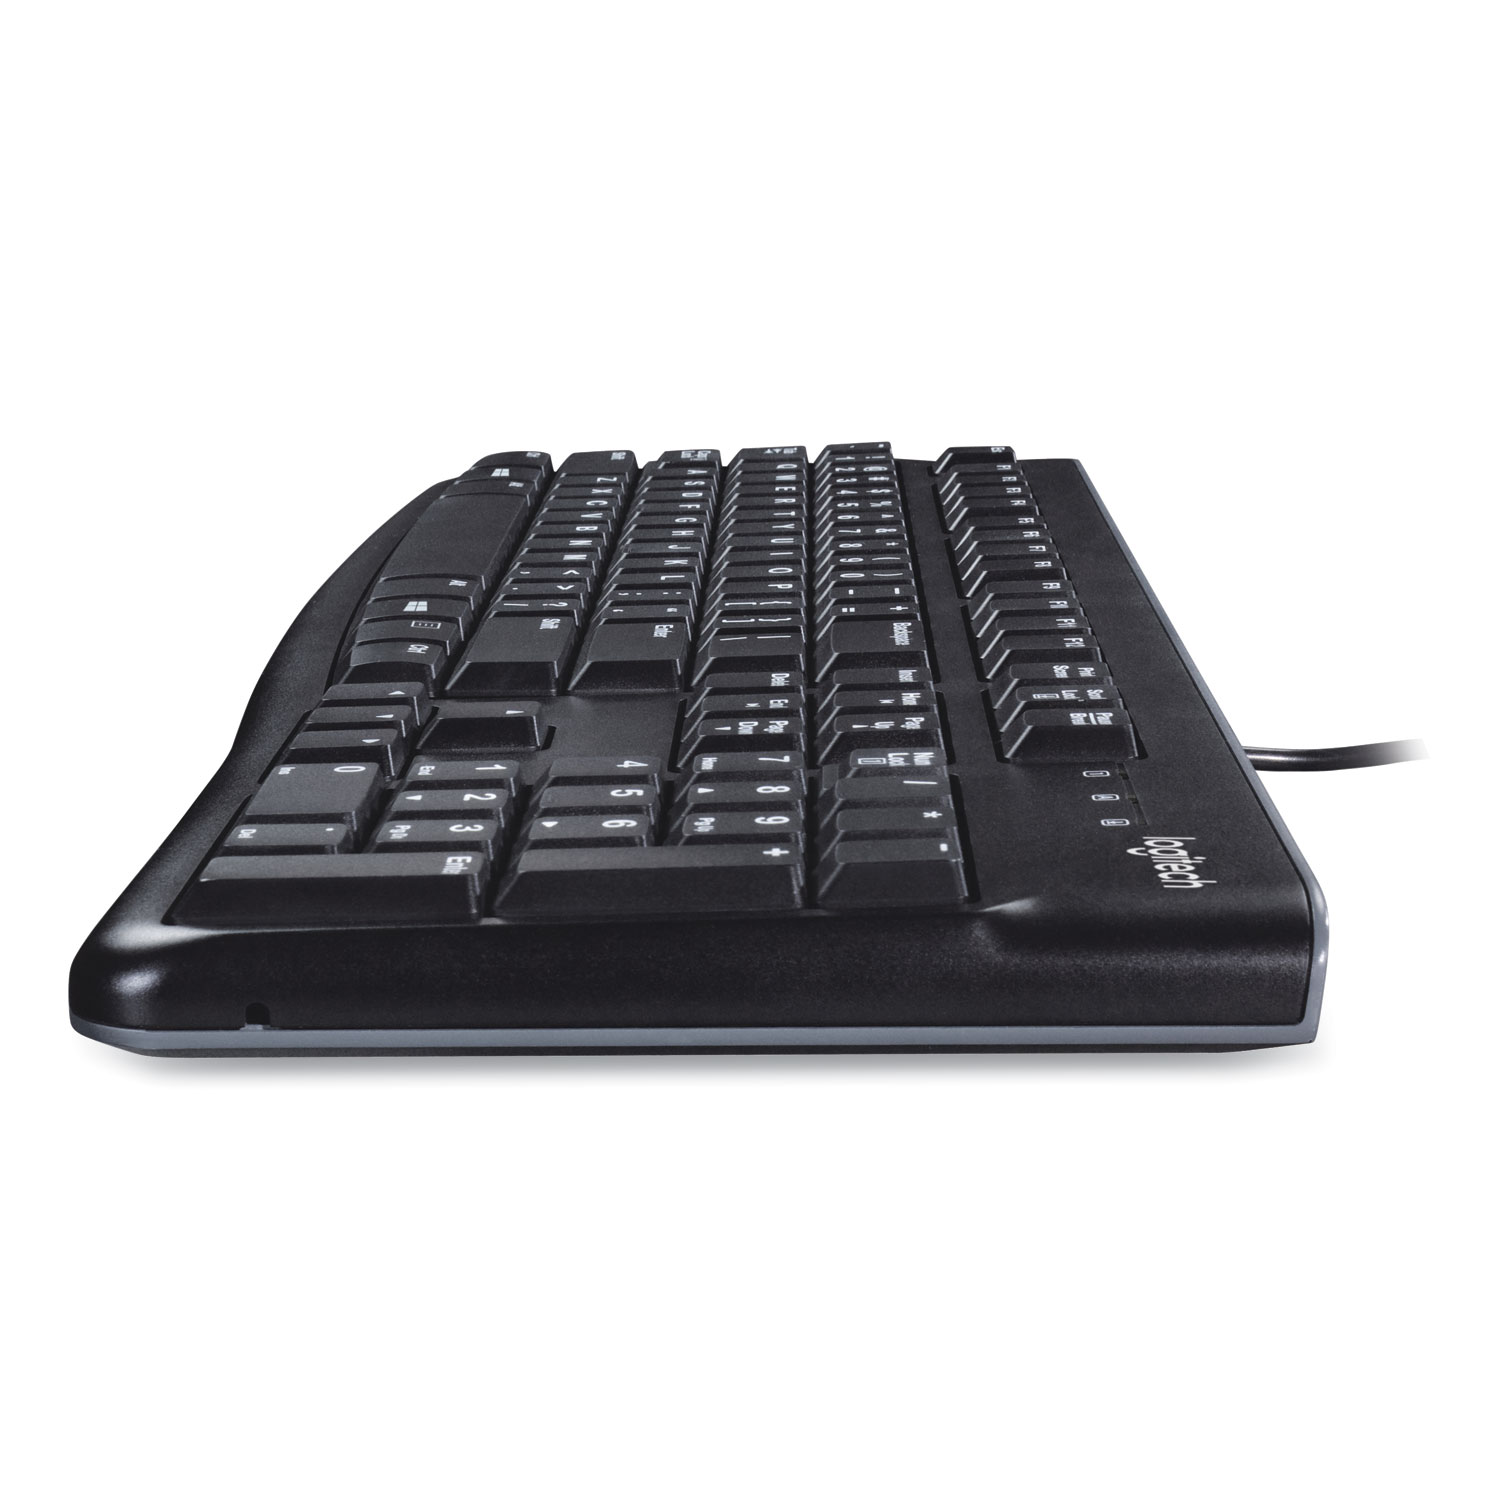 Logitech K120 Ergonomic Desktop Wired Keyboard, USB, Black (920002478) - image 5 of 5